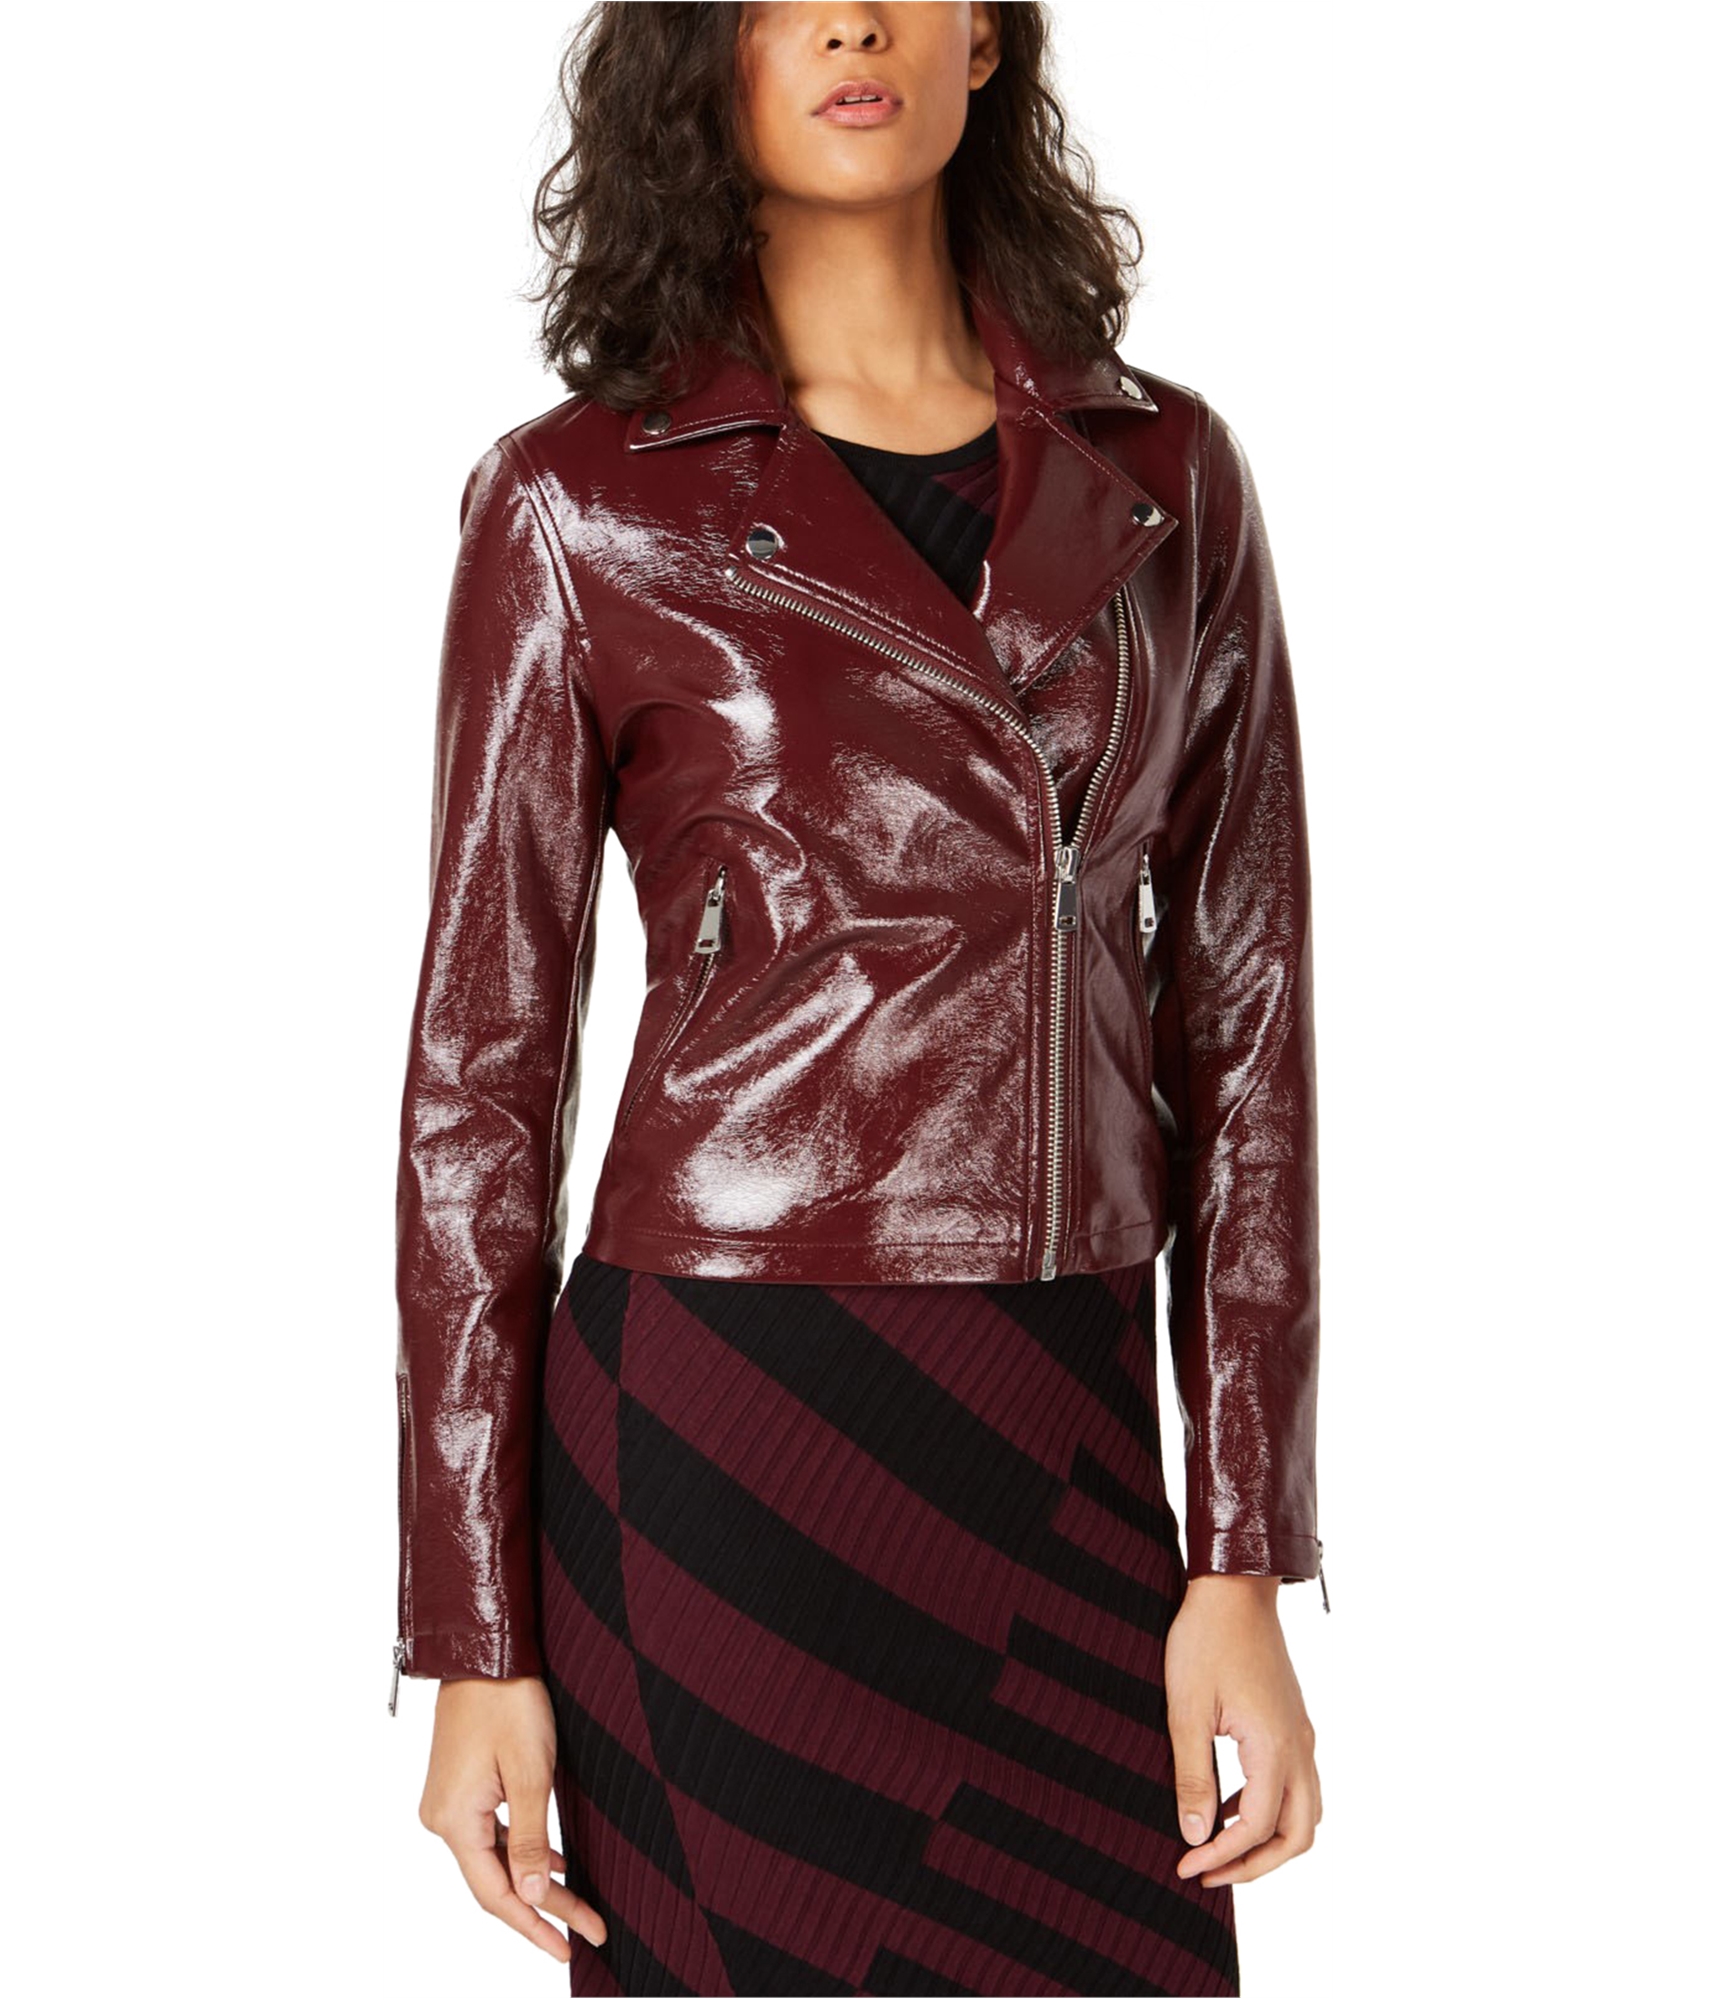 Woman-wearing-leather-jacket